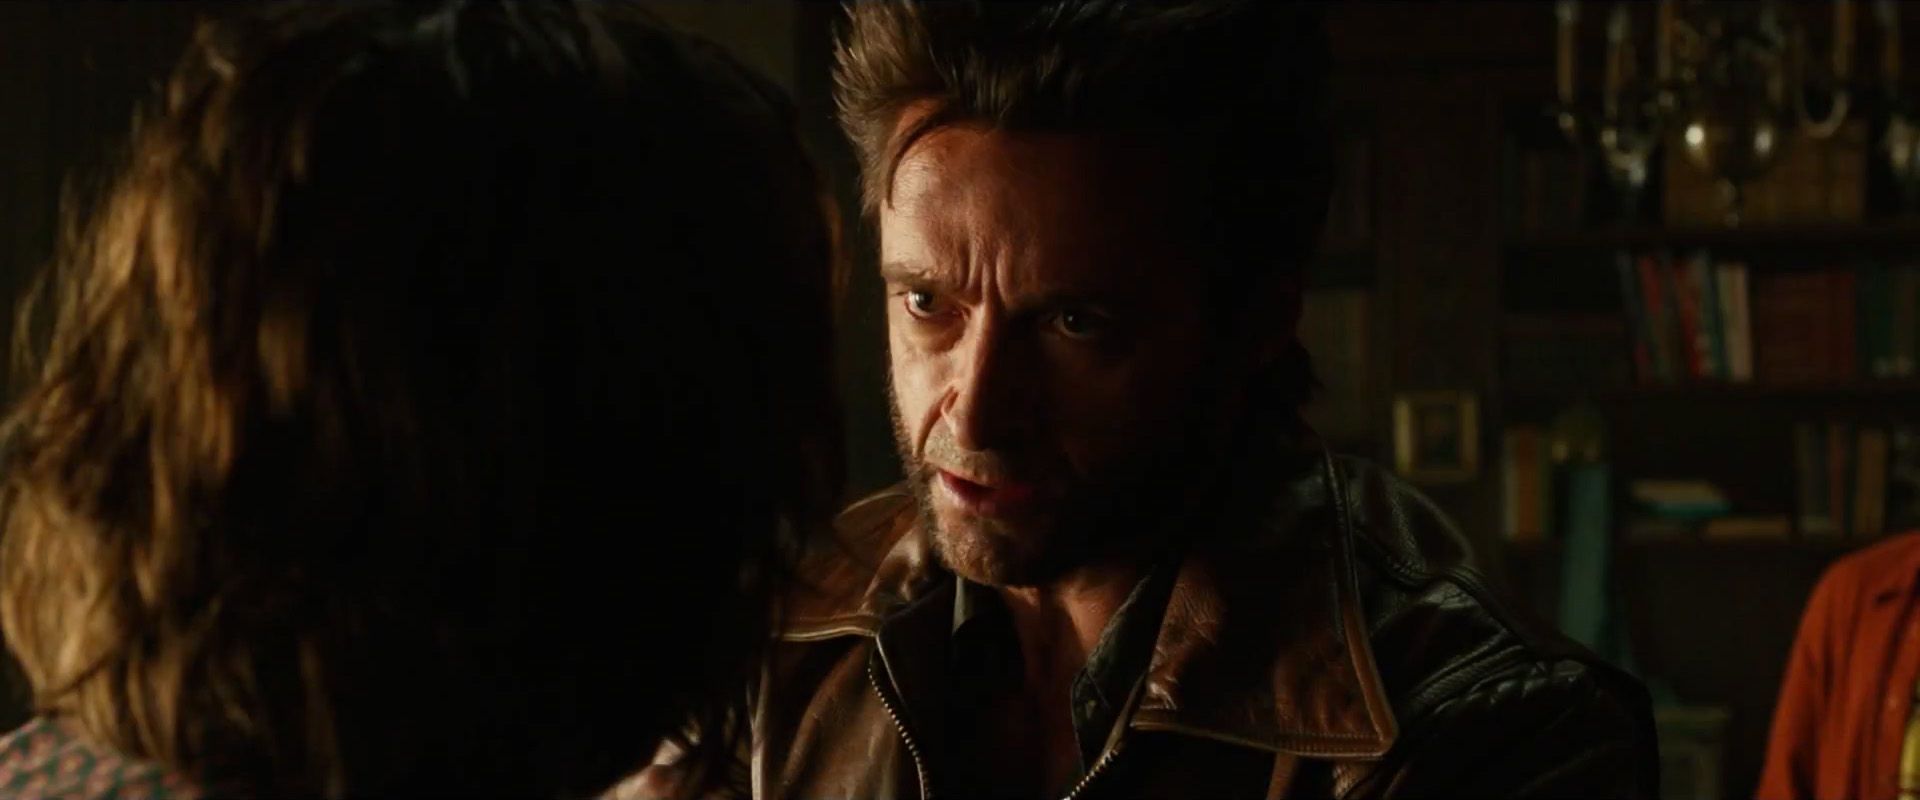 X-Men Days of Future Past Trailer - Wolverine Convincing Xavier